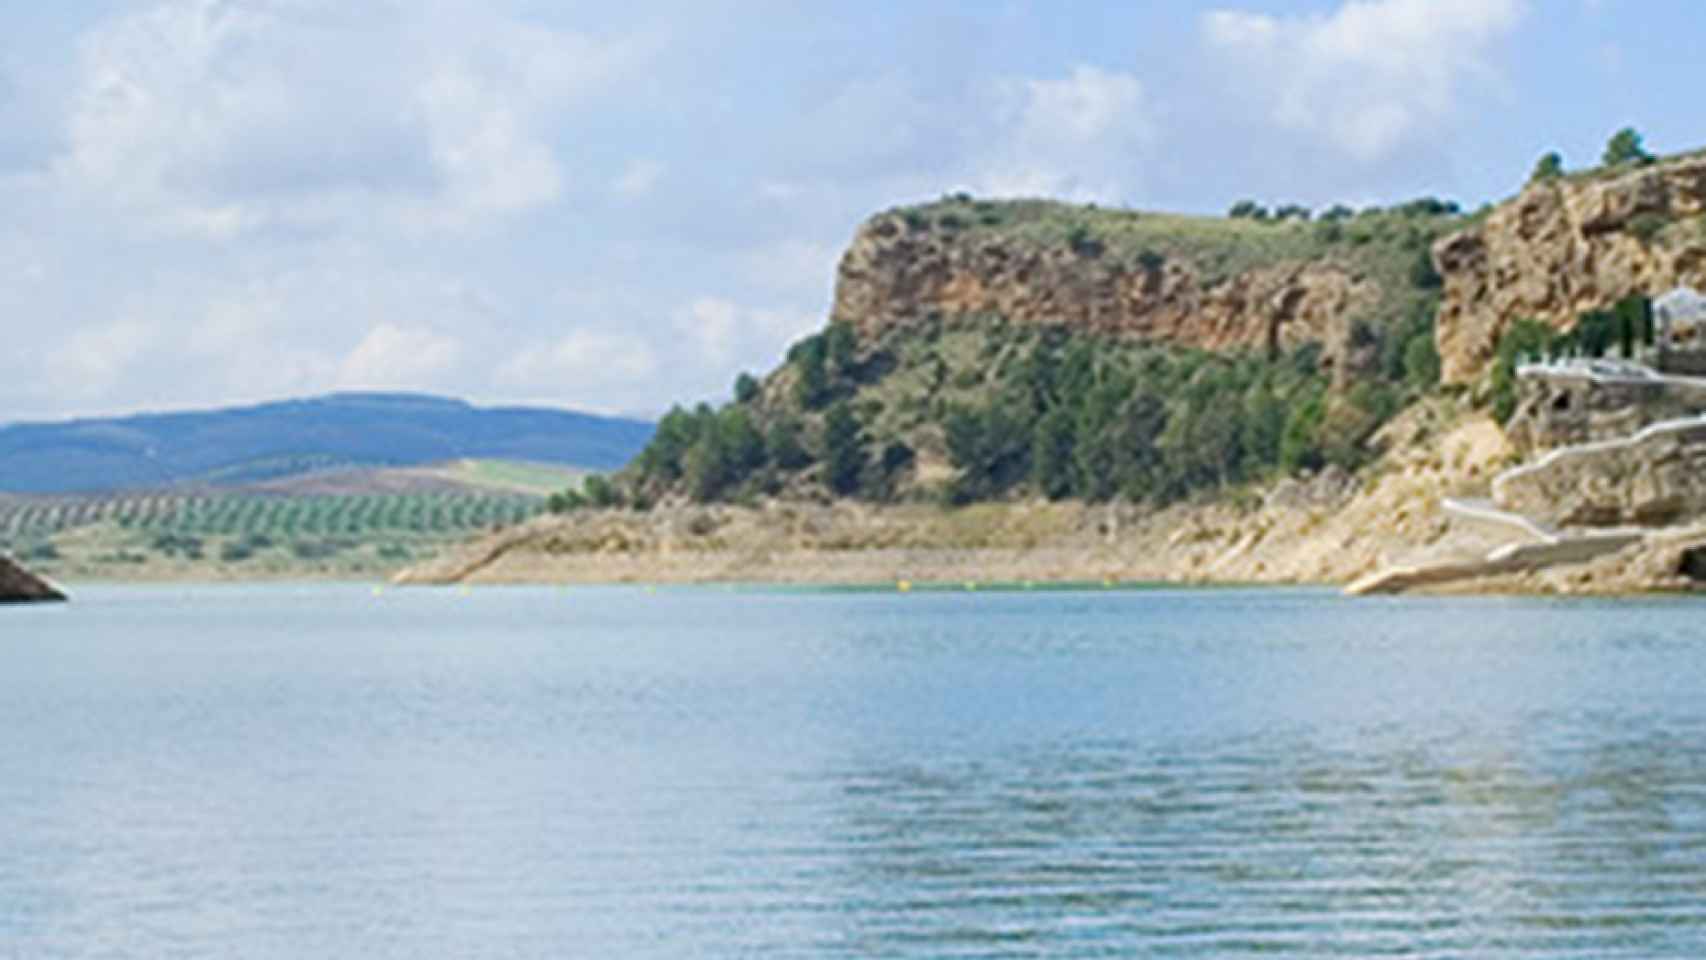 Vista del pantano del Chorro, en la provincia de Málaga.